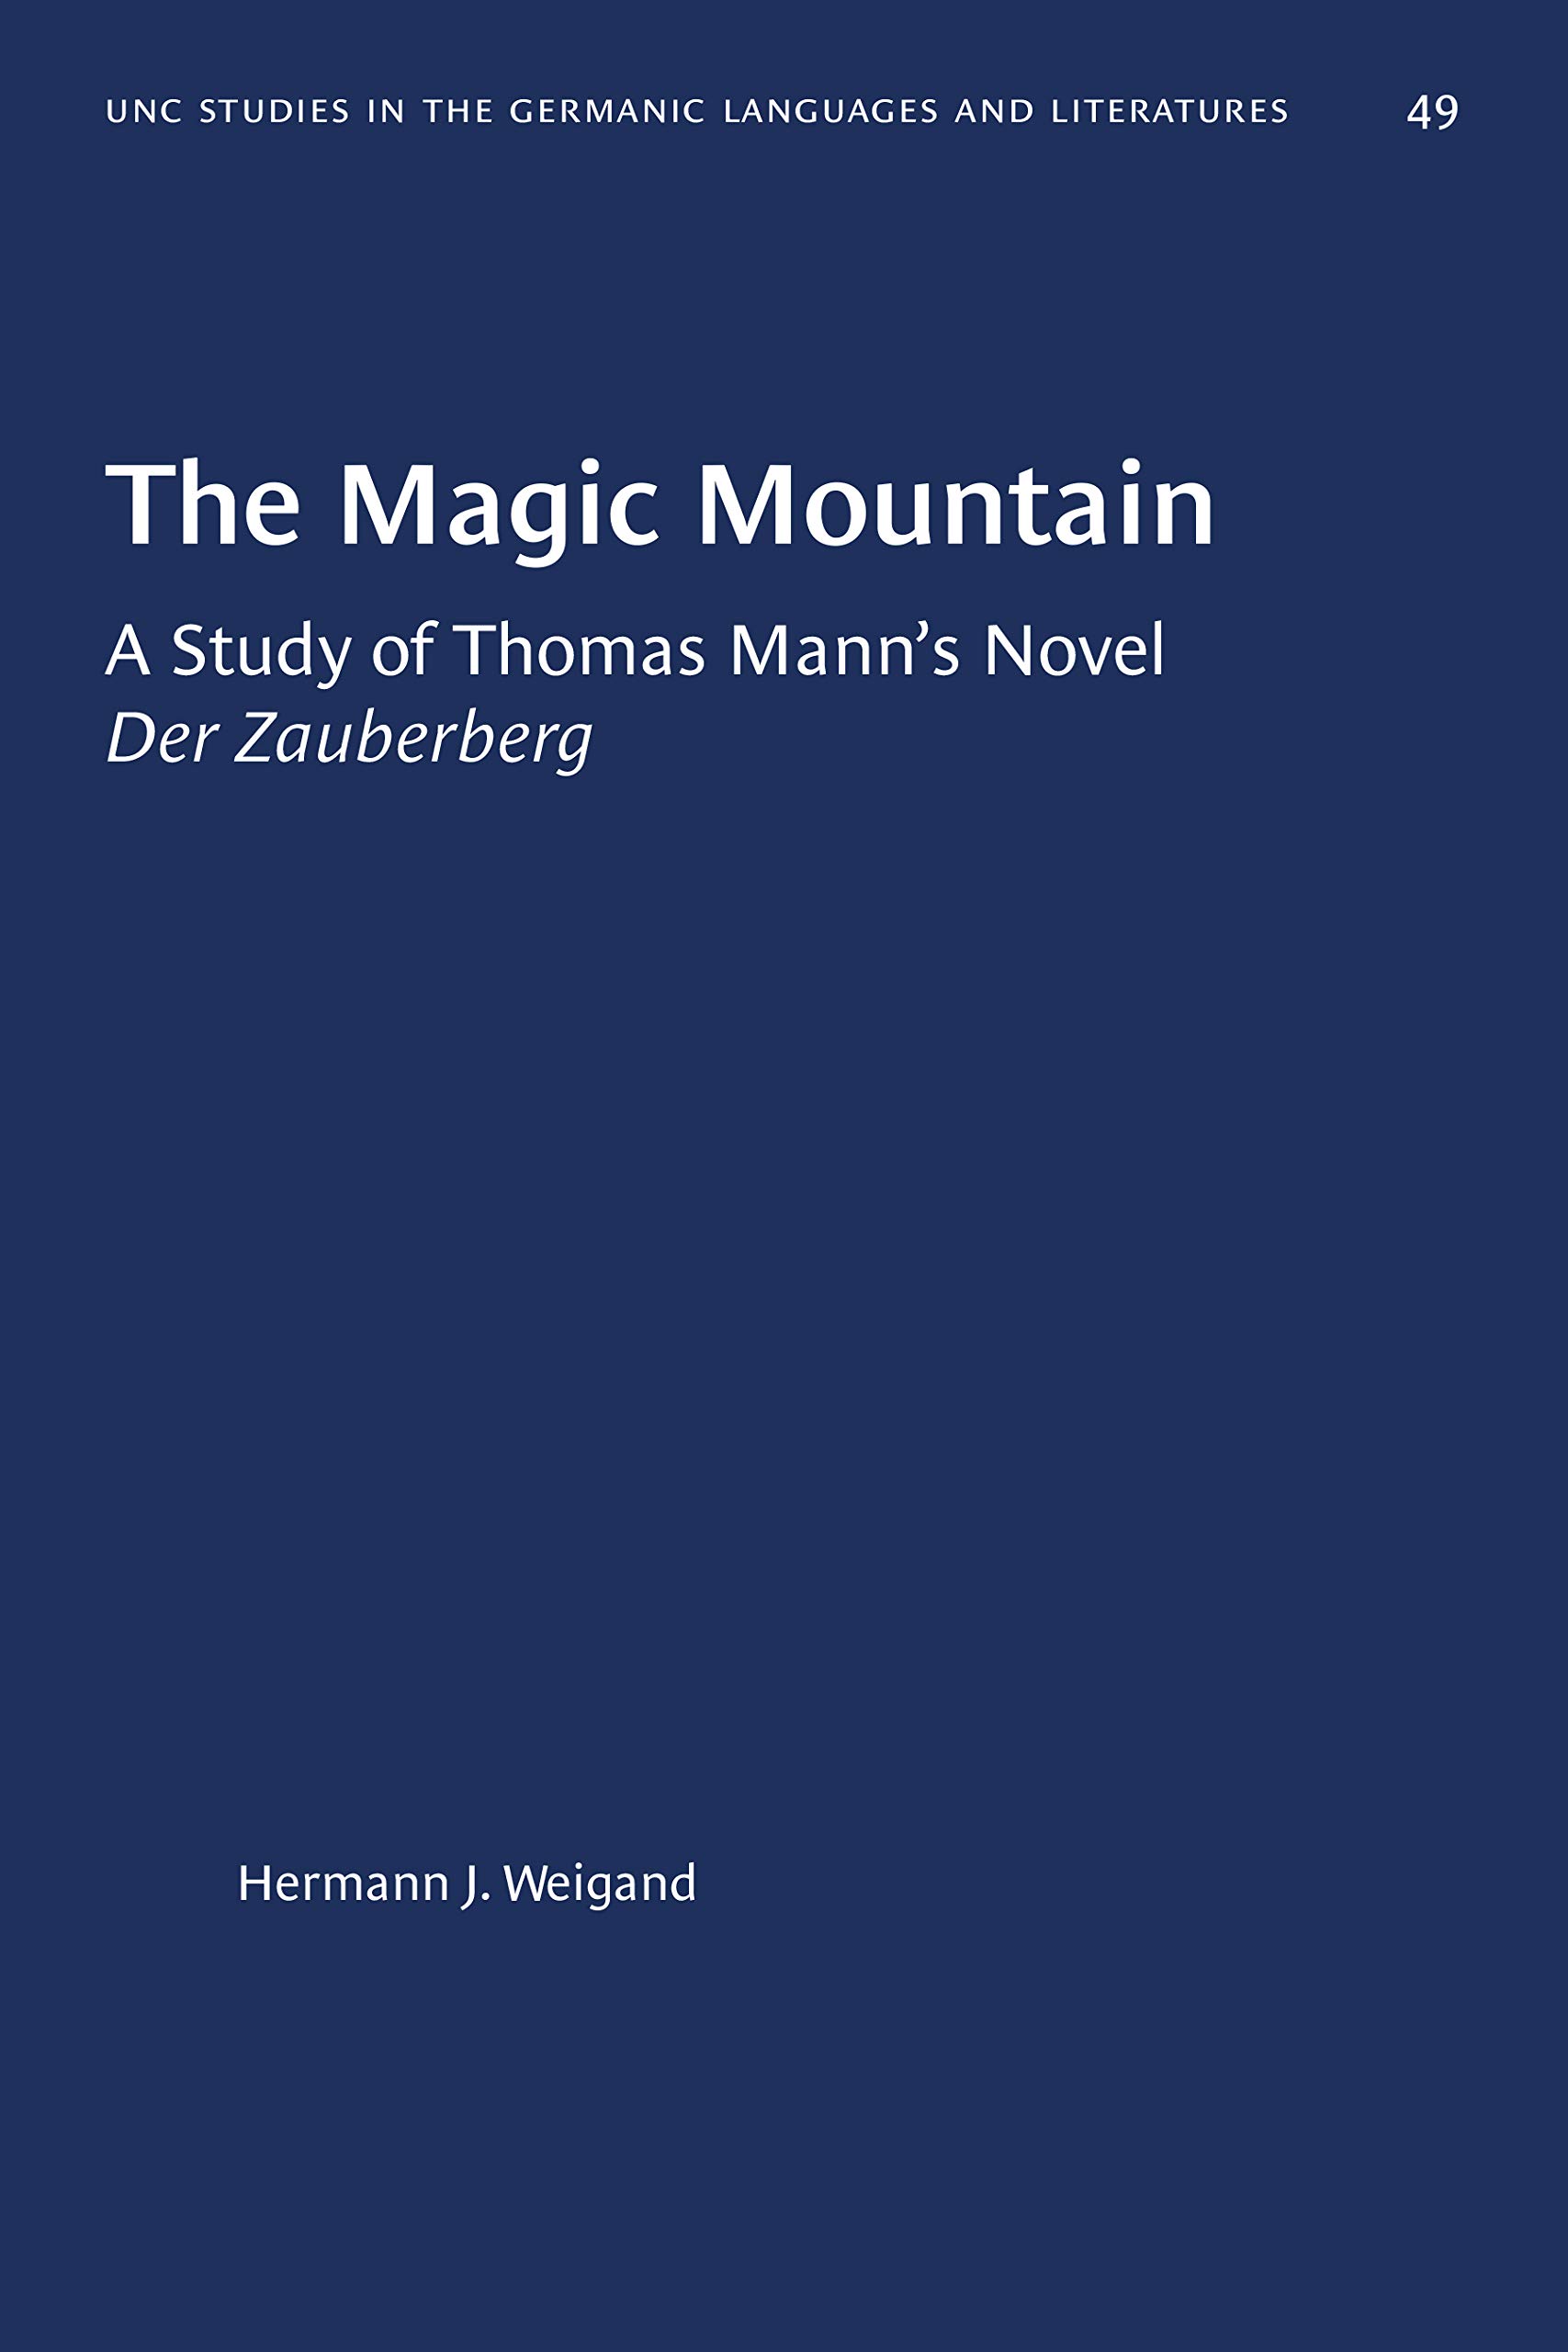 The Magic Mountain (Der Zauberberg)